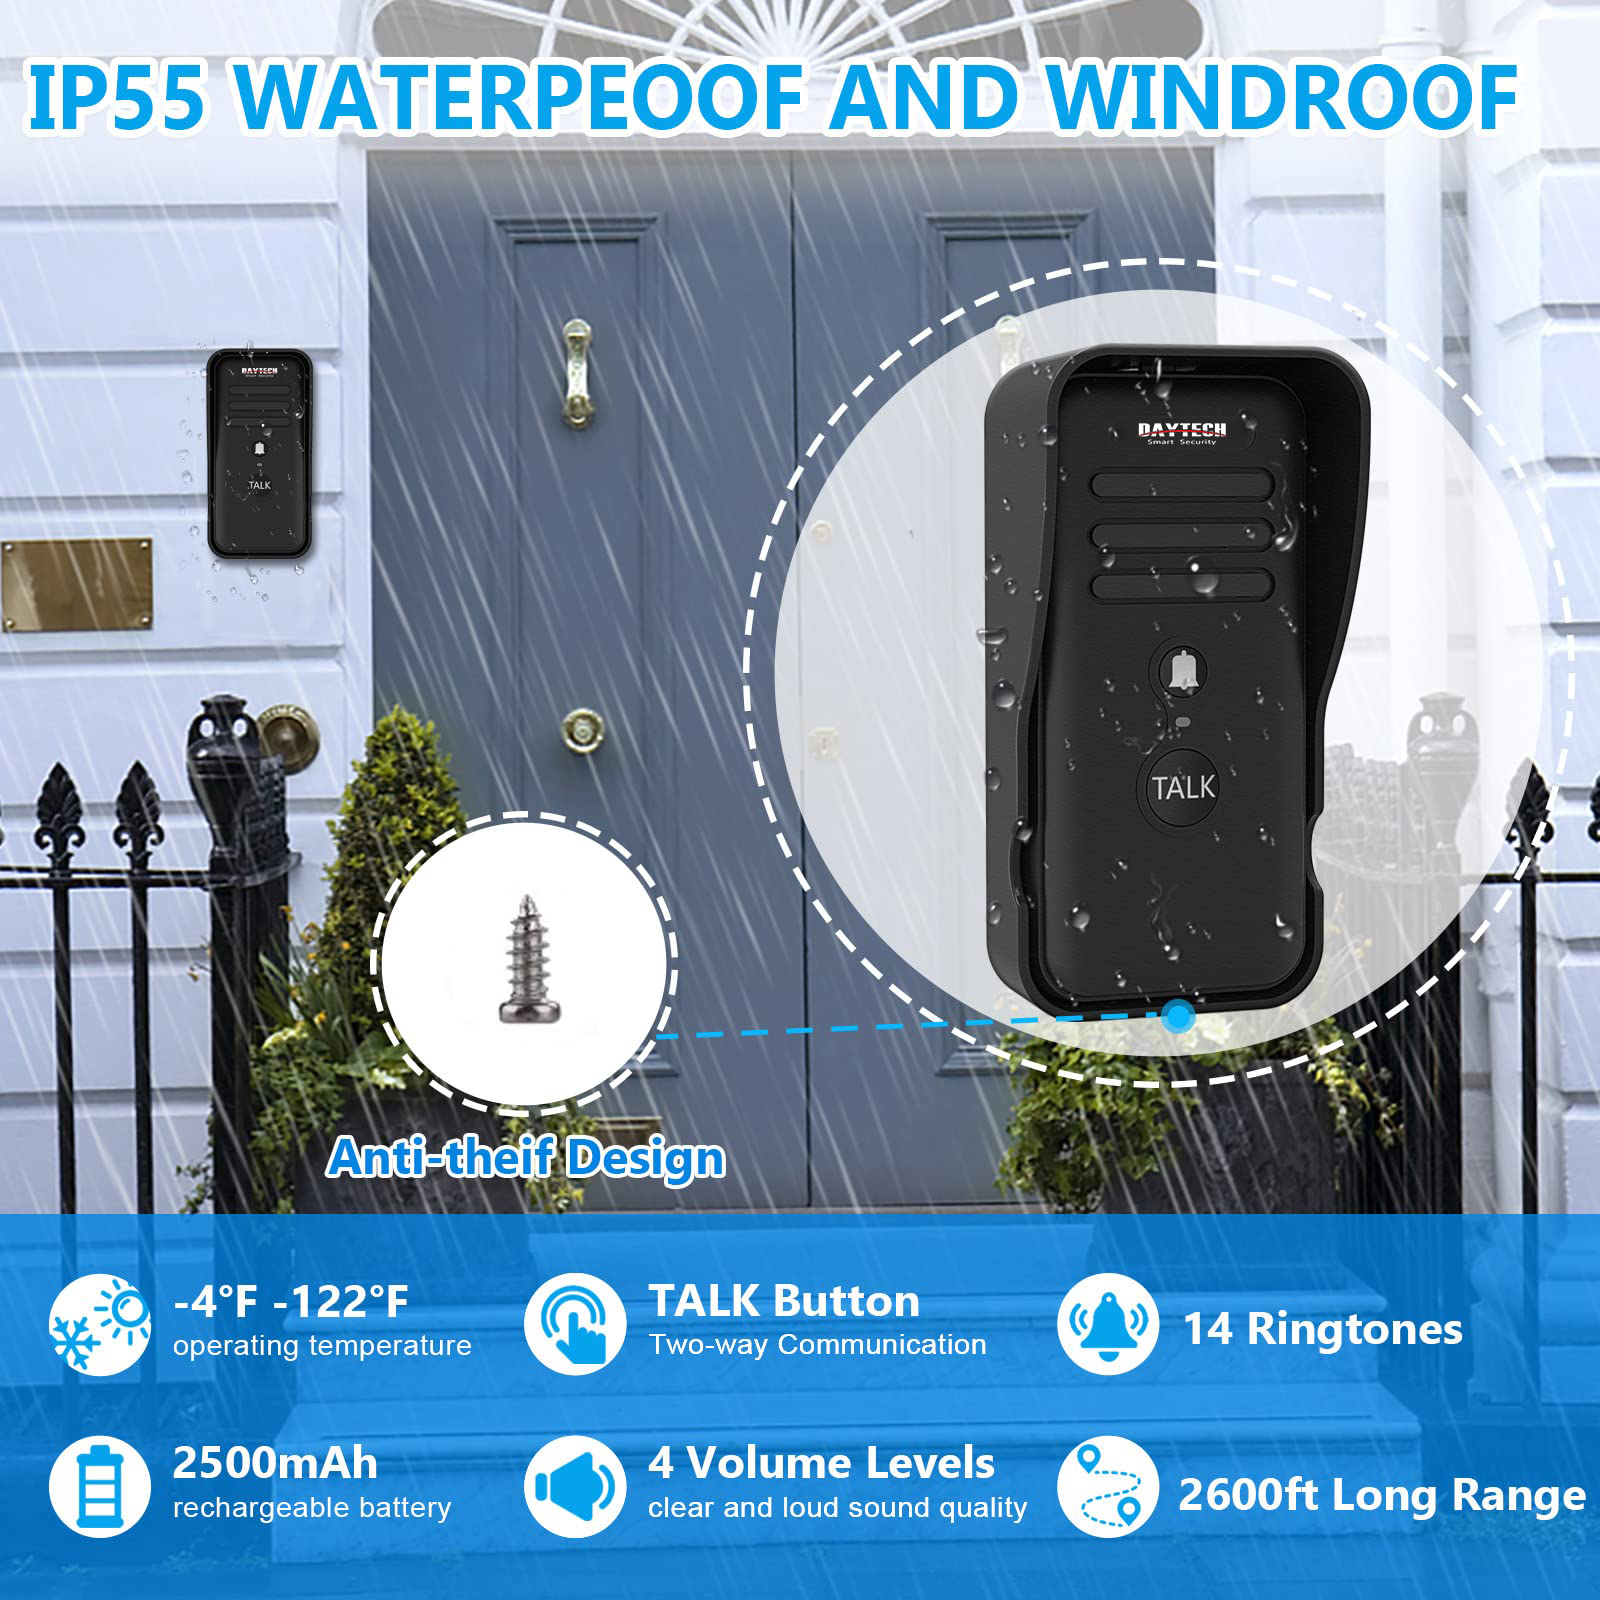 Daytech HI03-1 Wireless Intercom Doorbell for Home Apartment-1/2 Mile Long Range Intercomunicador